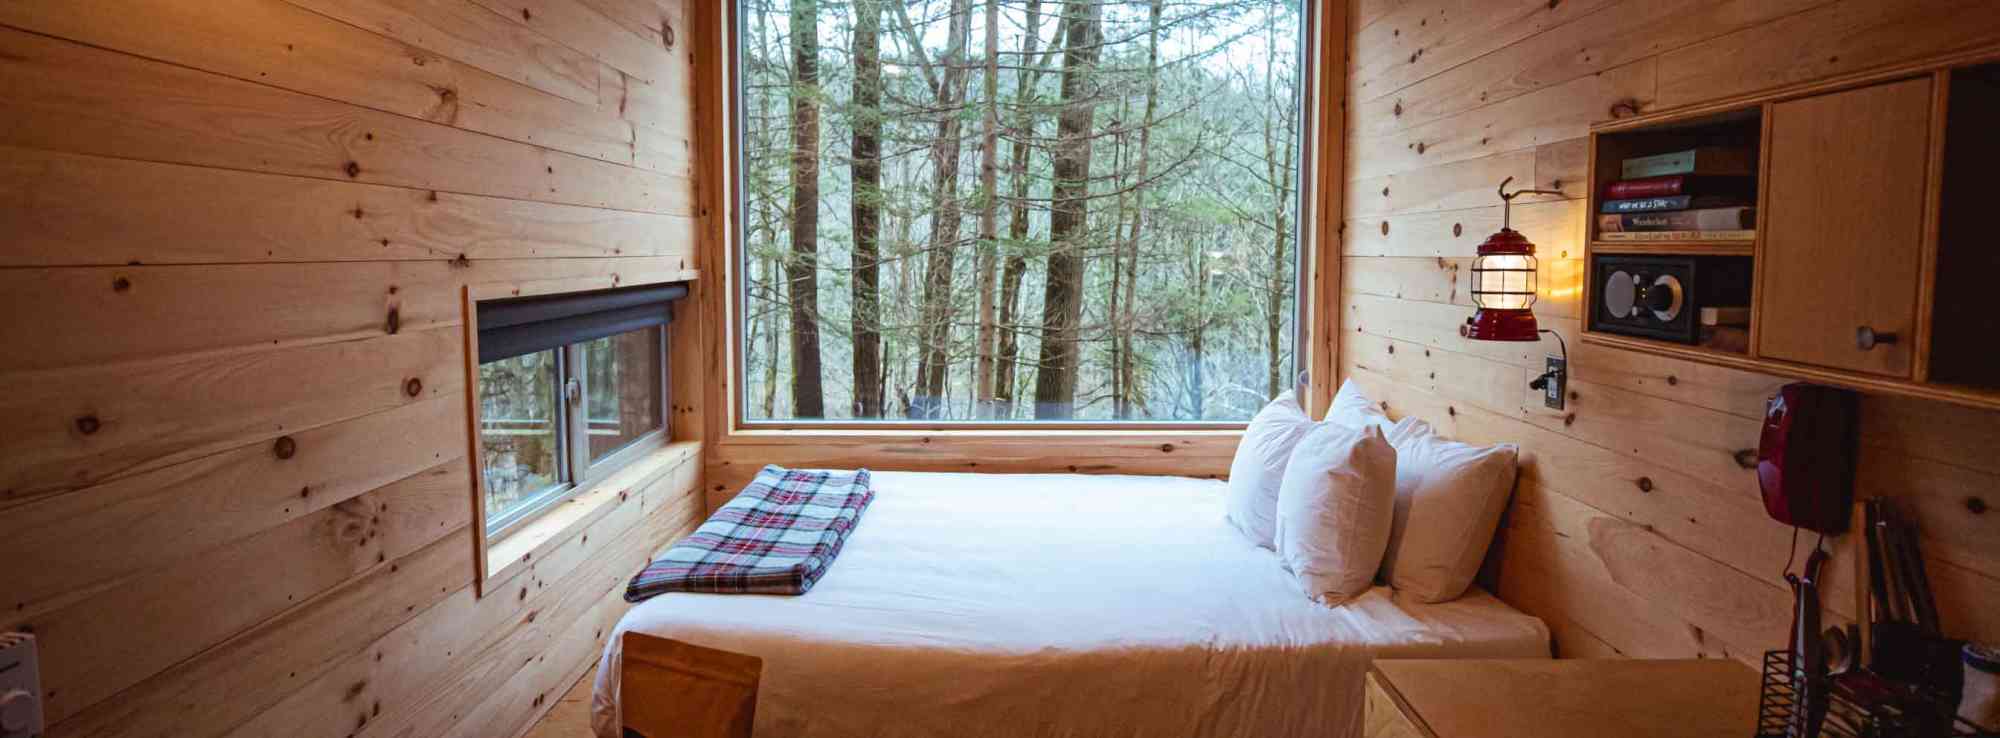 Bed inside Getaway cabin, with window at Getaway Mount Adams near Portland, OR